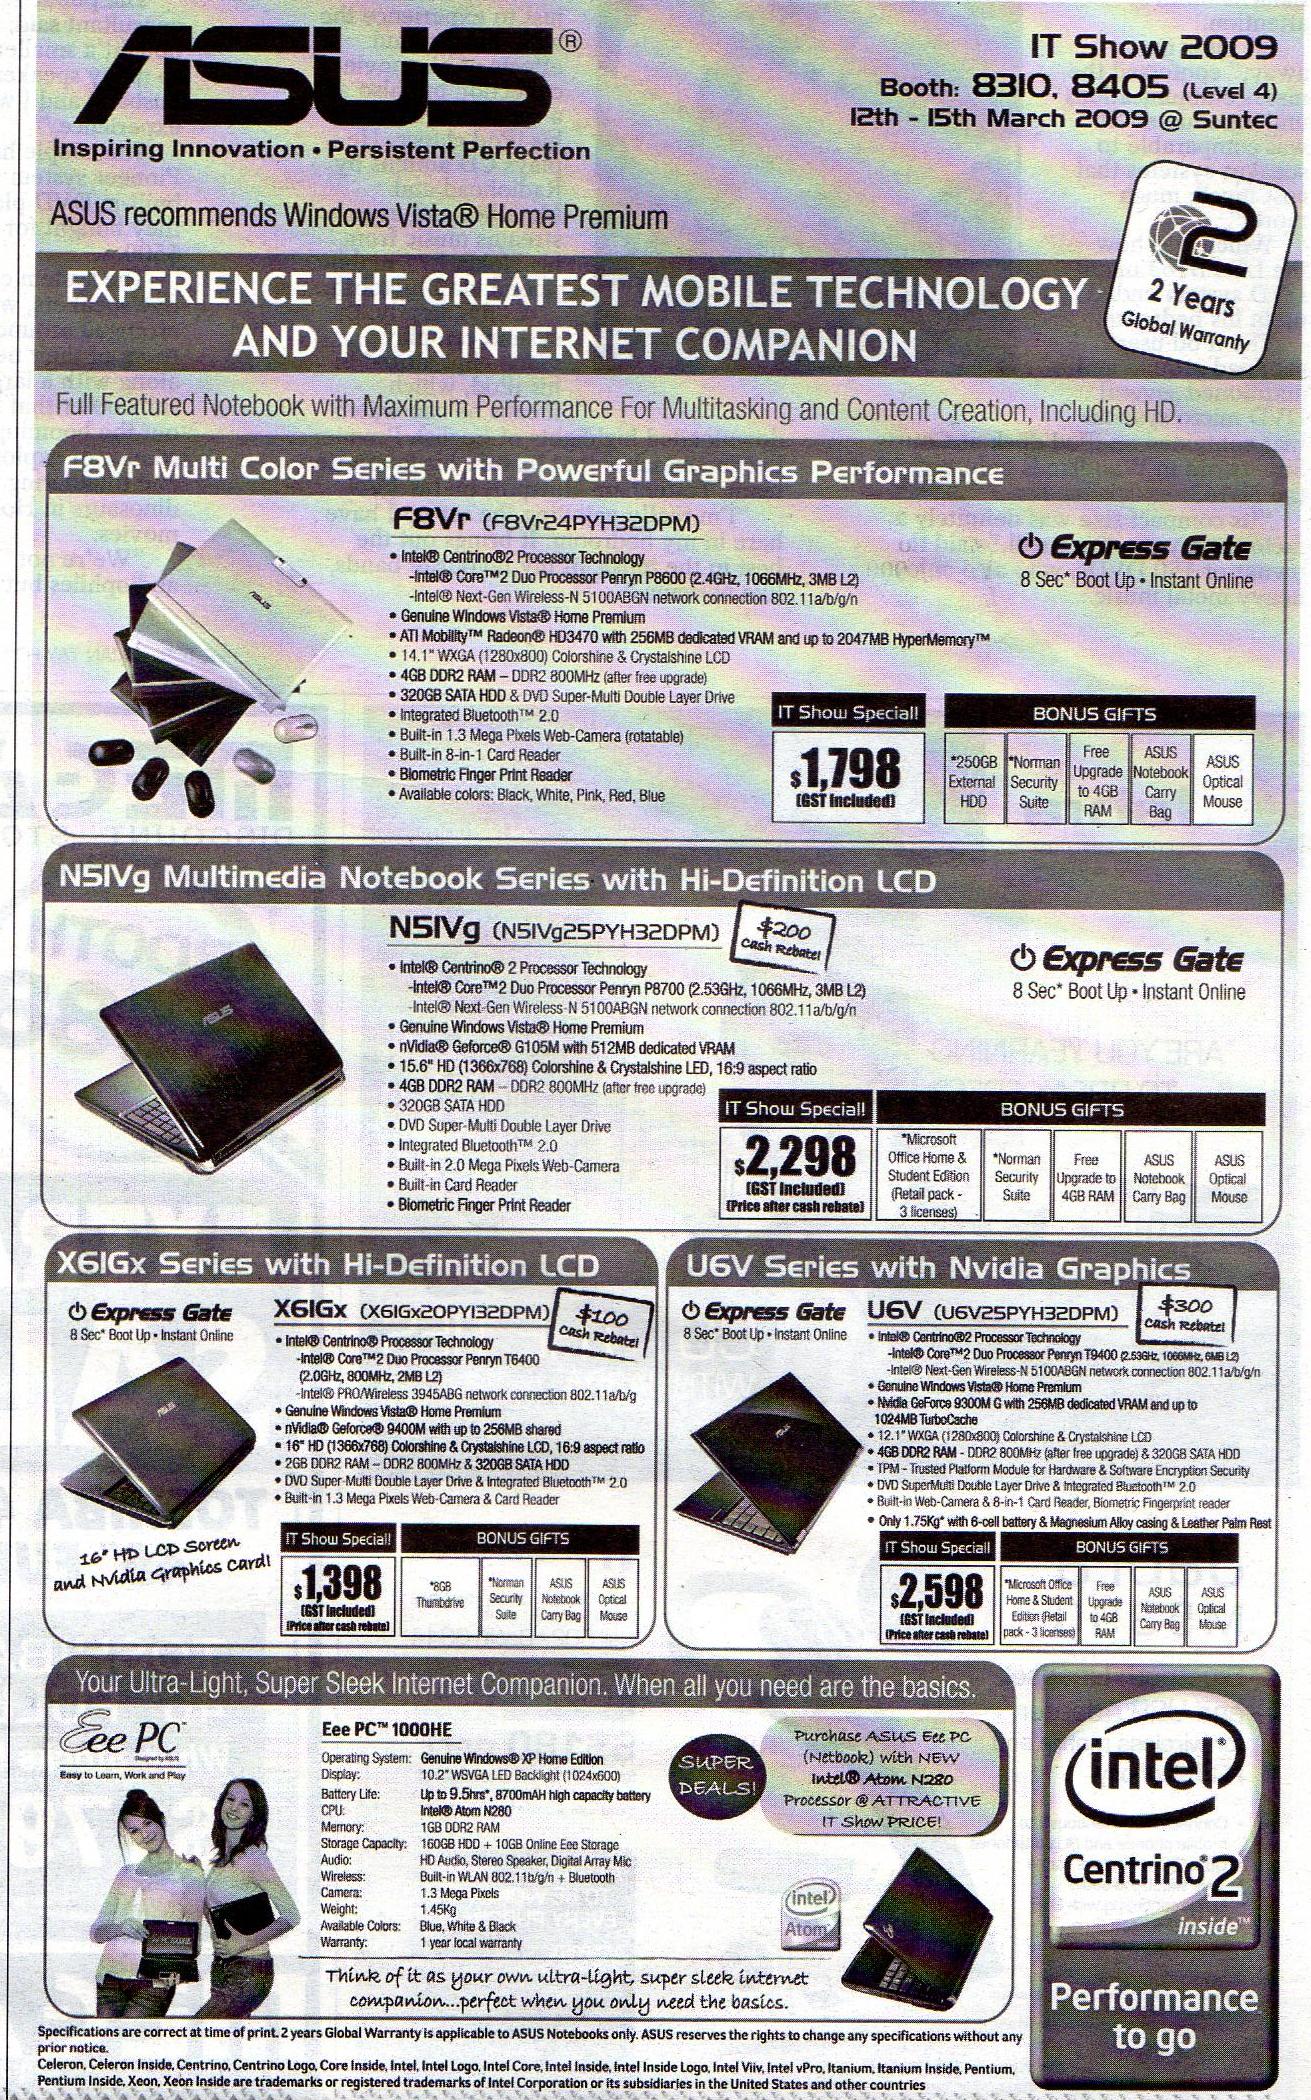 IT Show 2009 price list image brochure of ASUS Laptop (coldfreeze)